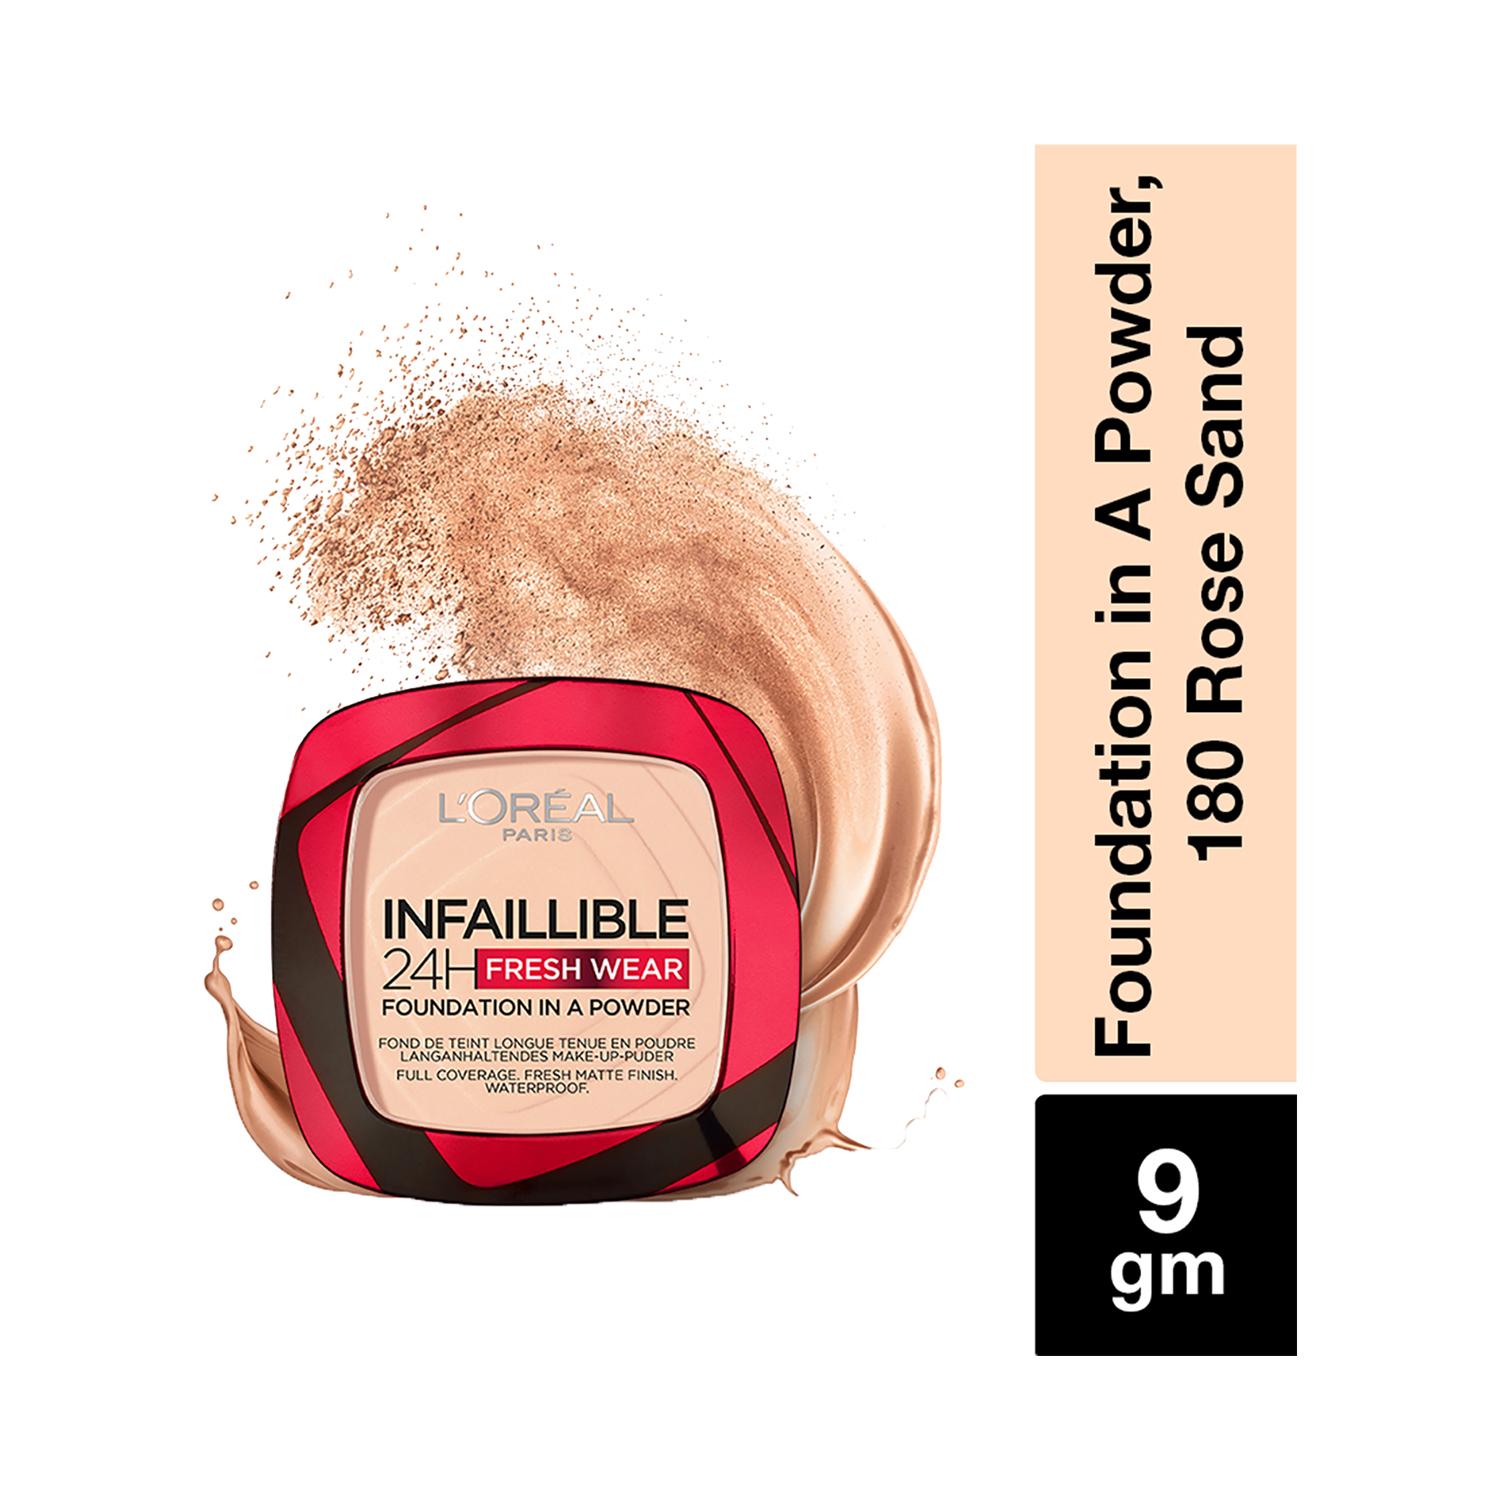 L'Oreal Paris | L'Oreal Paris Infallible 24H Fresh Wear Foundation In A Powder - 180 Rose Sand (9 g)